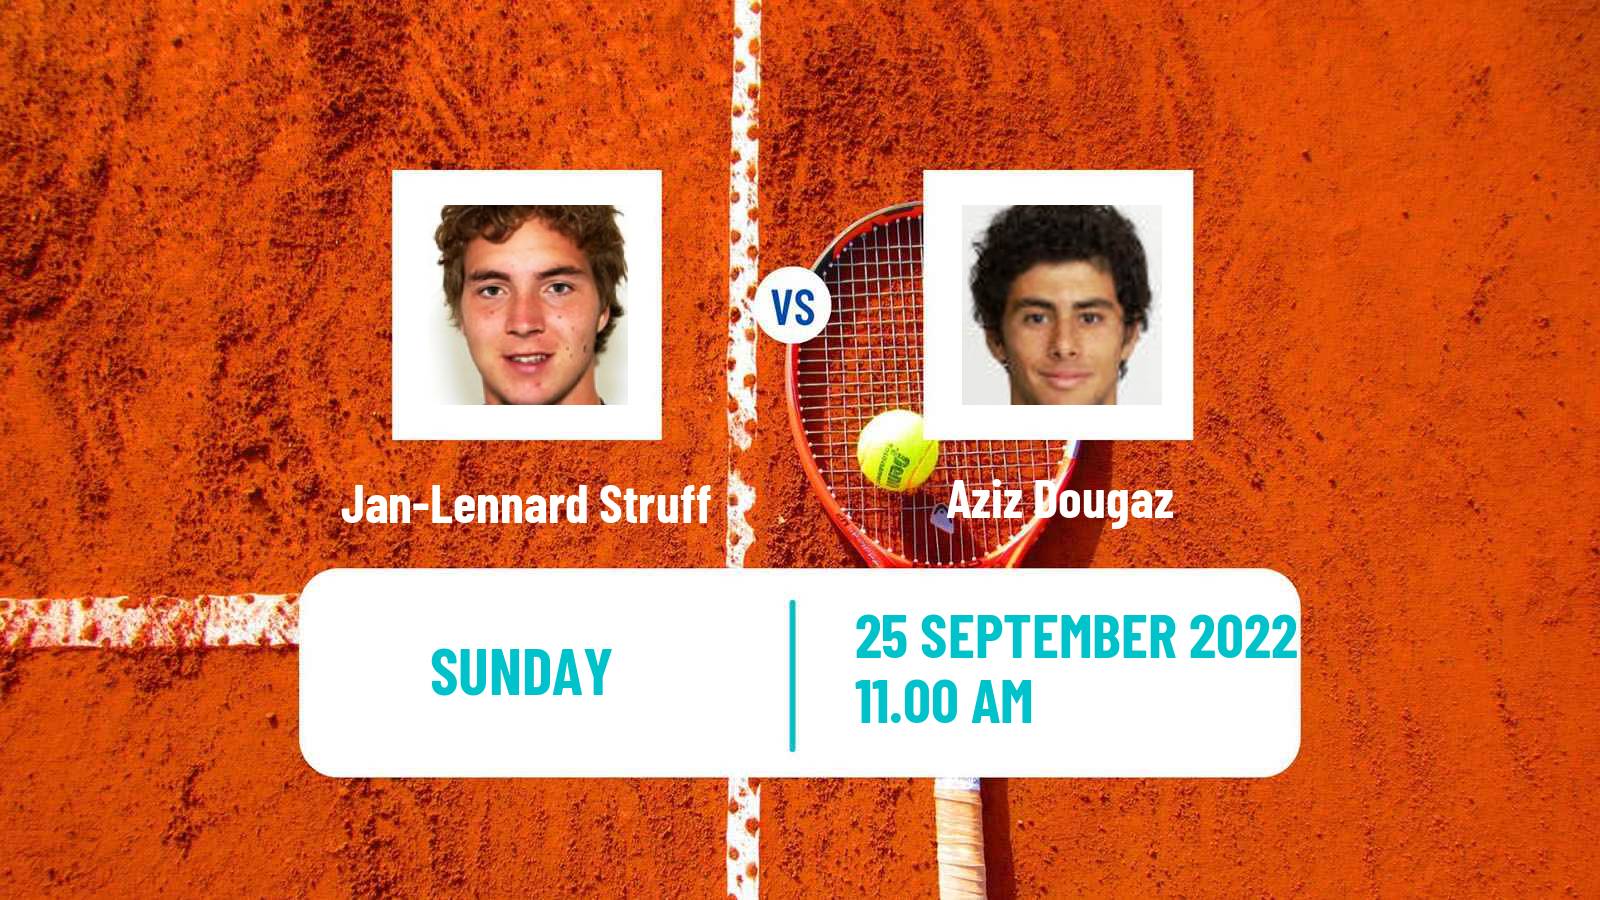 Tennis ATP Sofia Jan-Lennard Struff - Aziz Dougaz